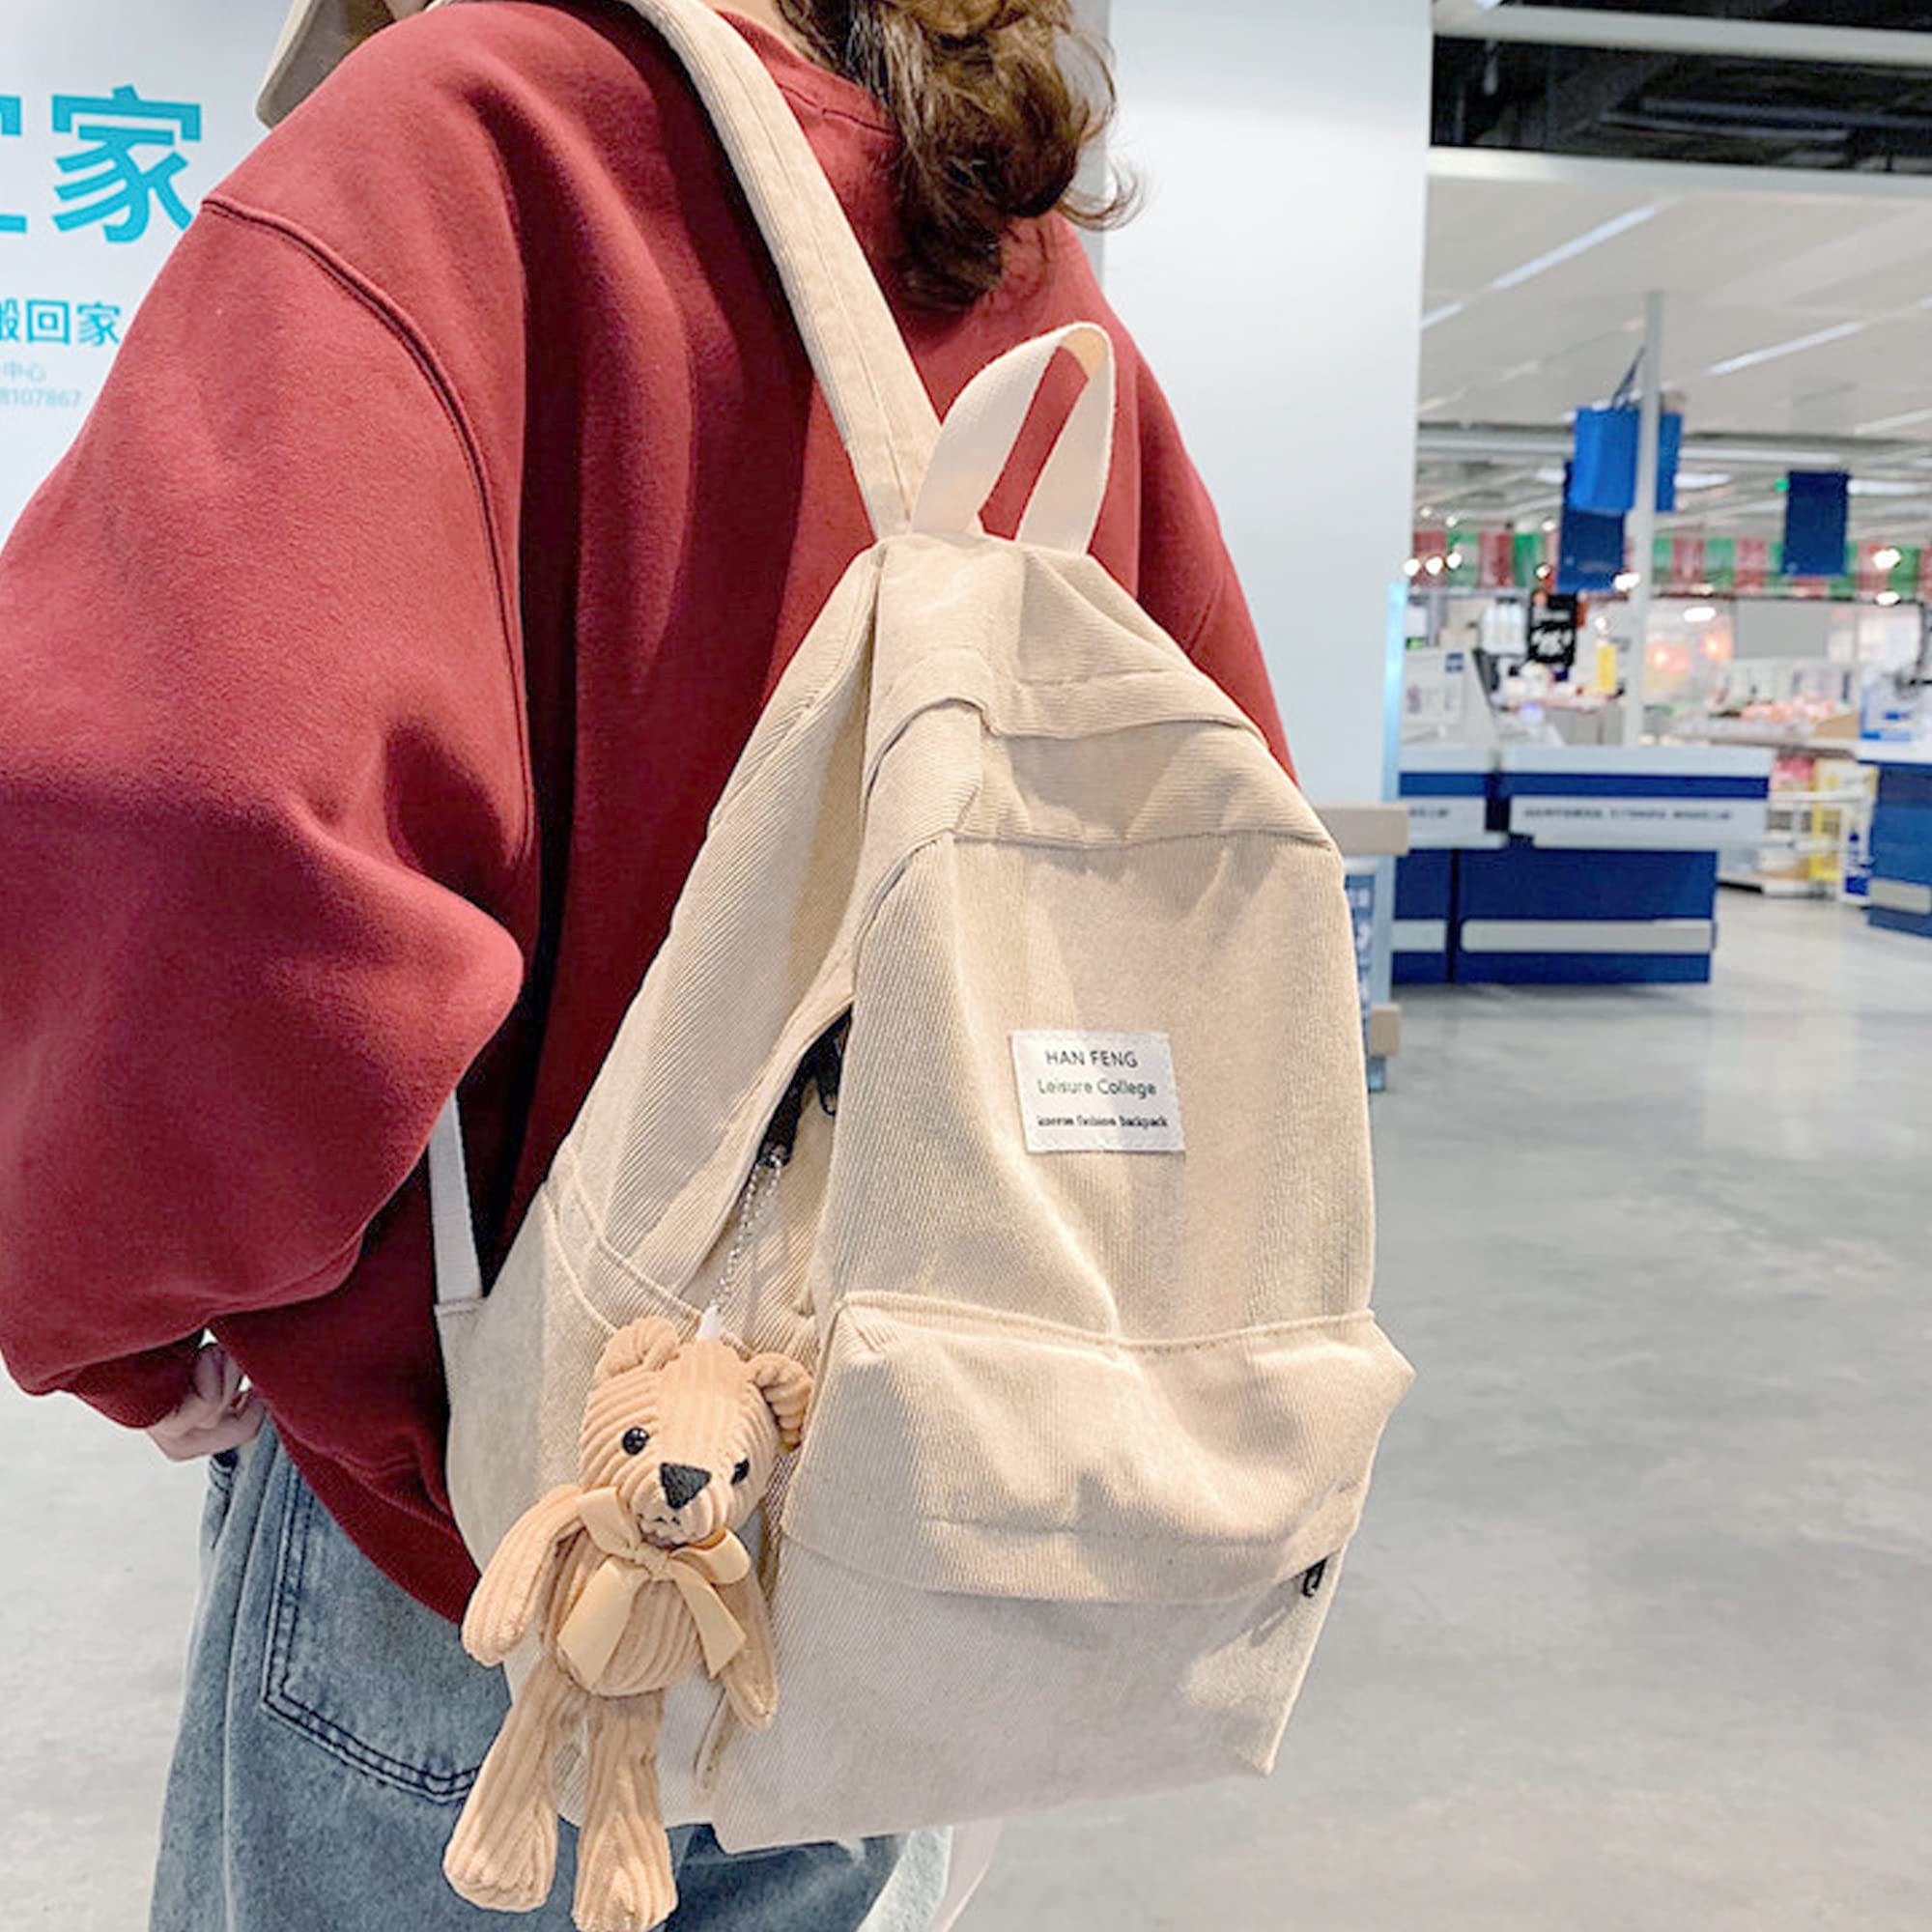 Hyuyikuwol Casual Corduroy Backpack Travel Daypack Book Bag Laptop Bag for Women Men, Beige